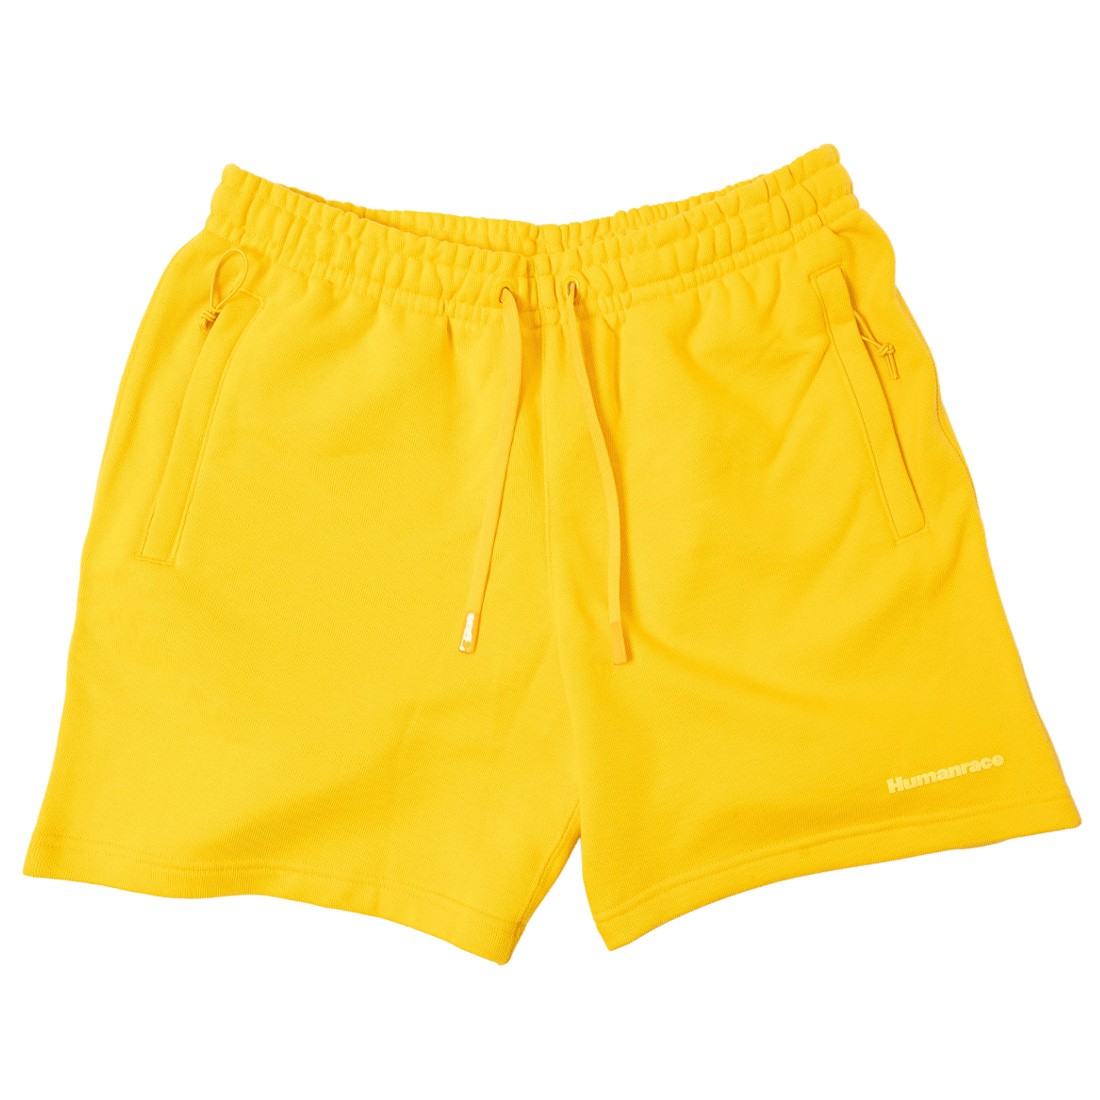 Adidas x Pharrell Williams Men Basics Shorts (gold / bold gold)